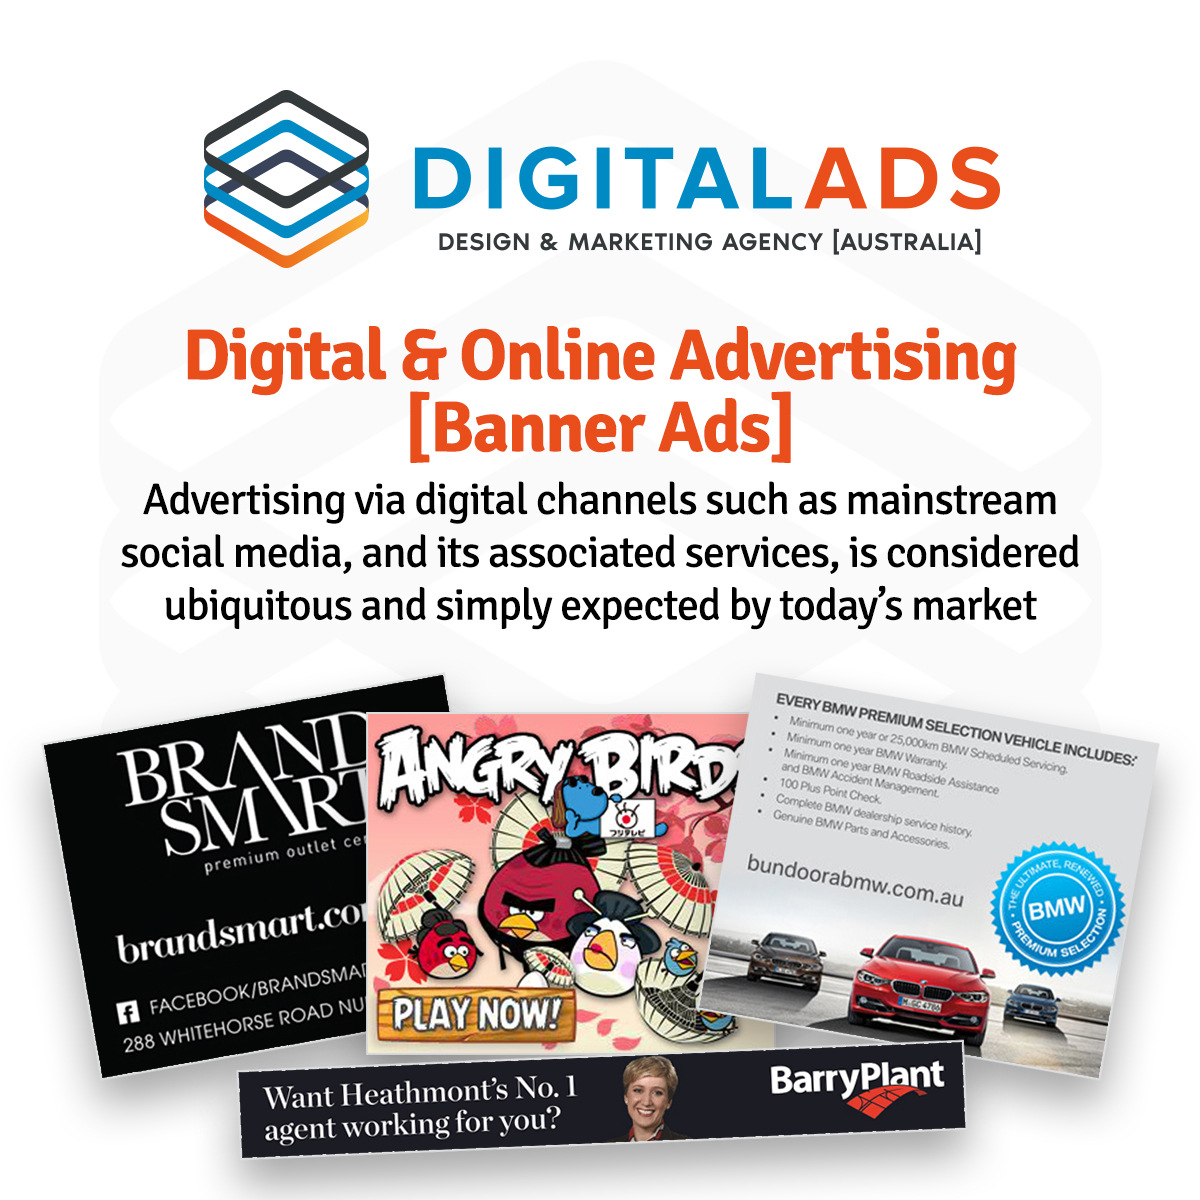 digitalads preview digital online advertising banner ads design studio marketing agency australia | Design, Advertising & Marketing Agency | DigitalAds [Australia]